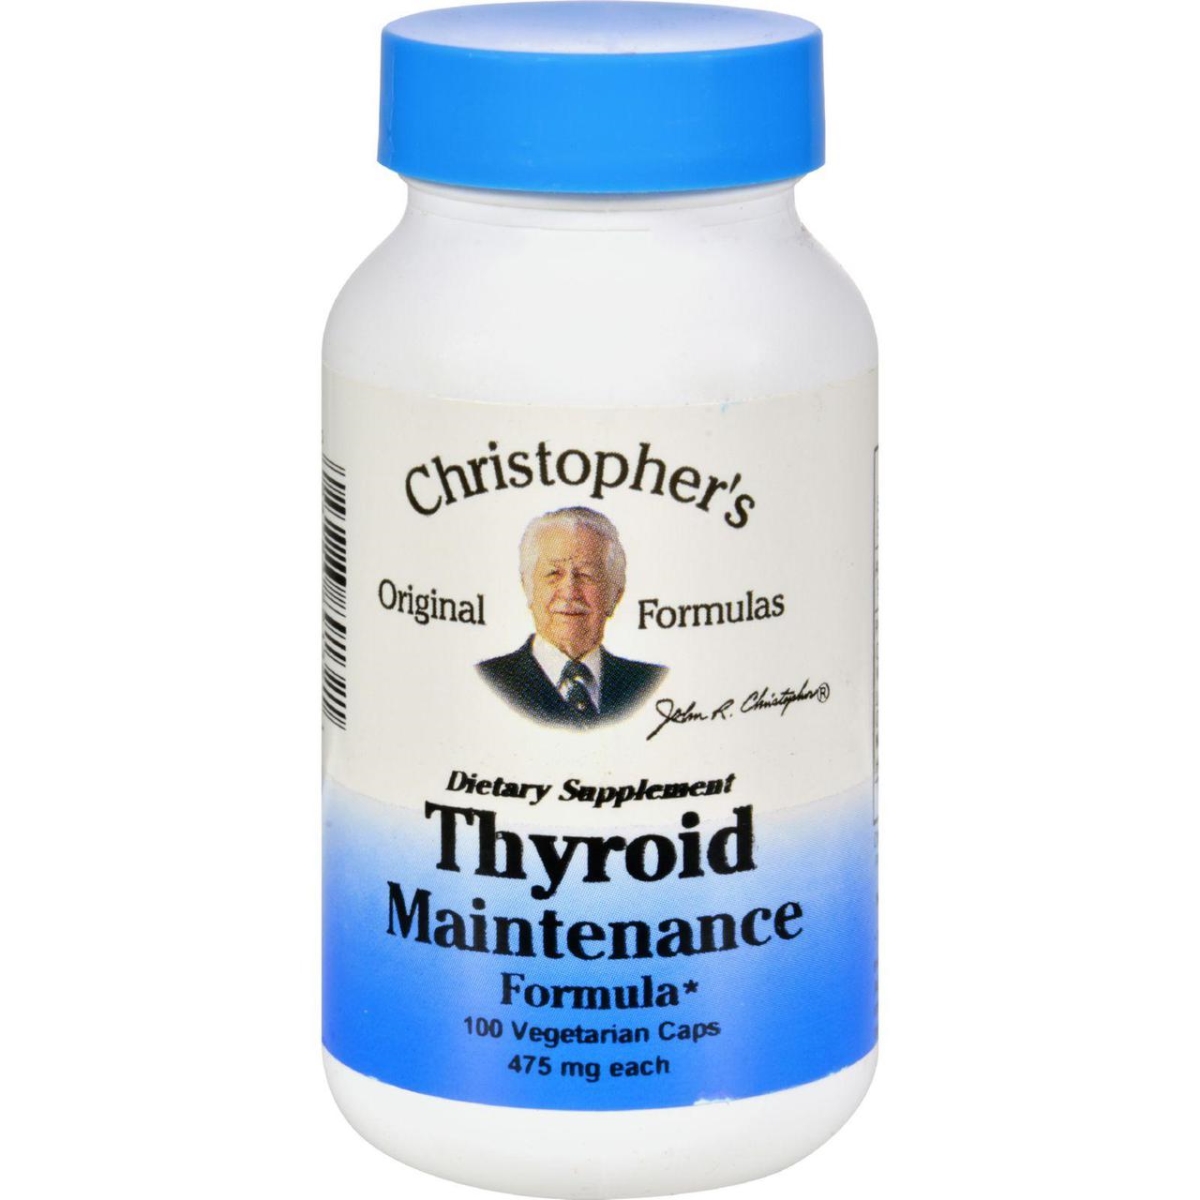 Hg0414094 485 Mg Thyroid Maintenance, 100 Vegetarian Capsules